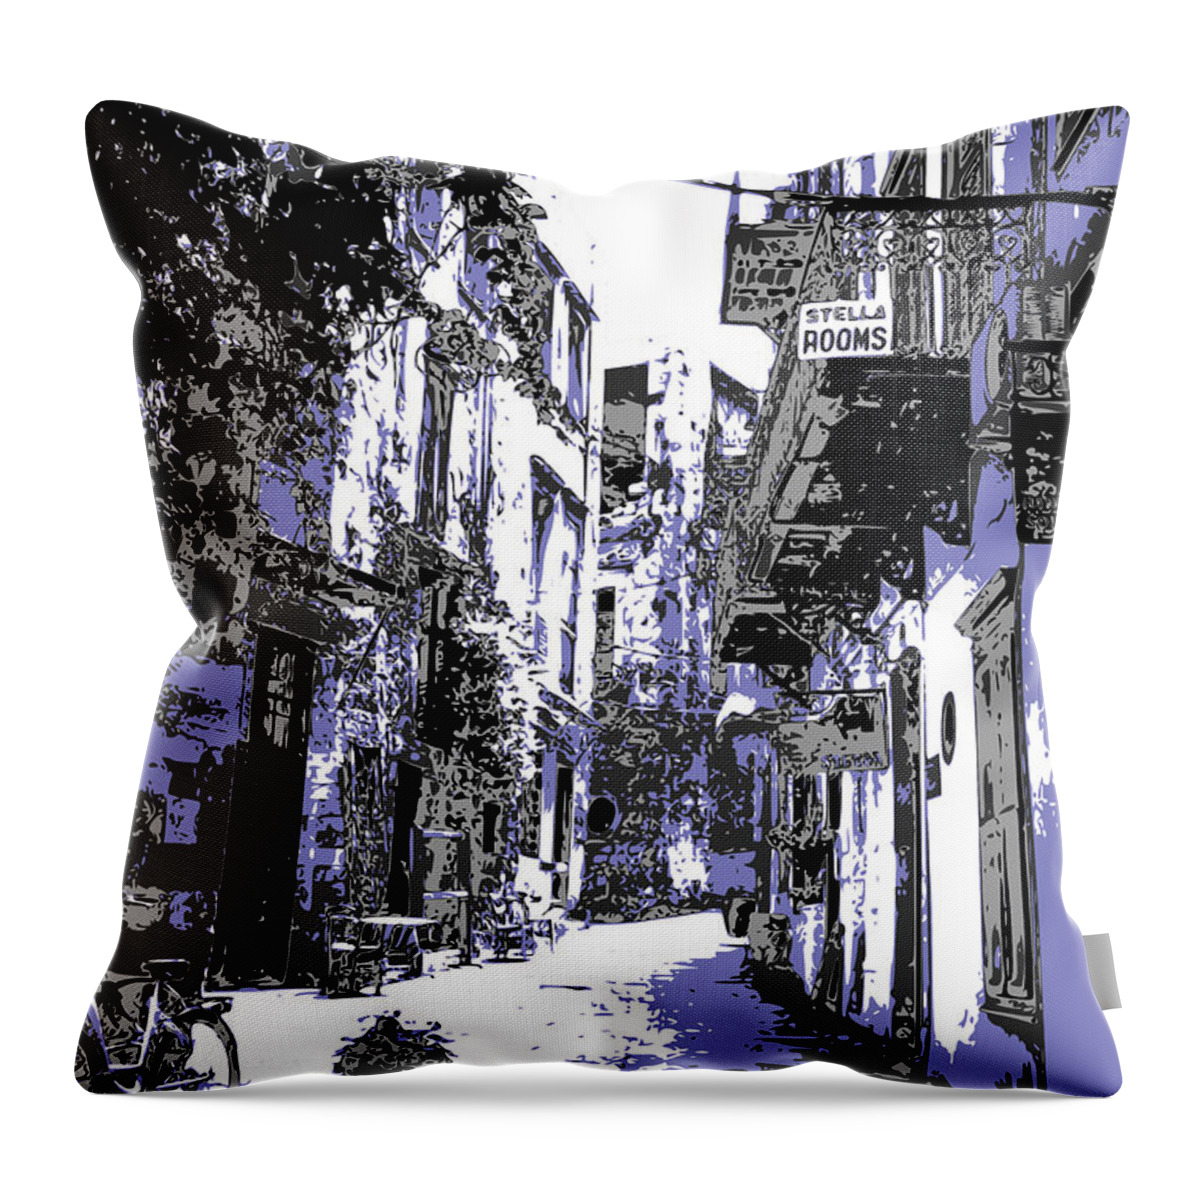 Xania Throw Pillow featuring the digital art Xania street by Piotr Dulski